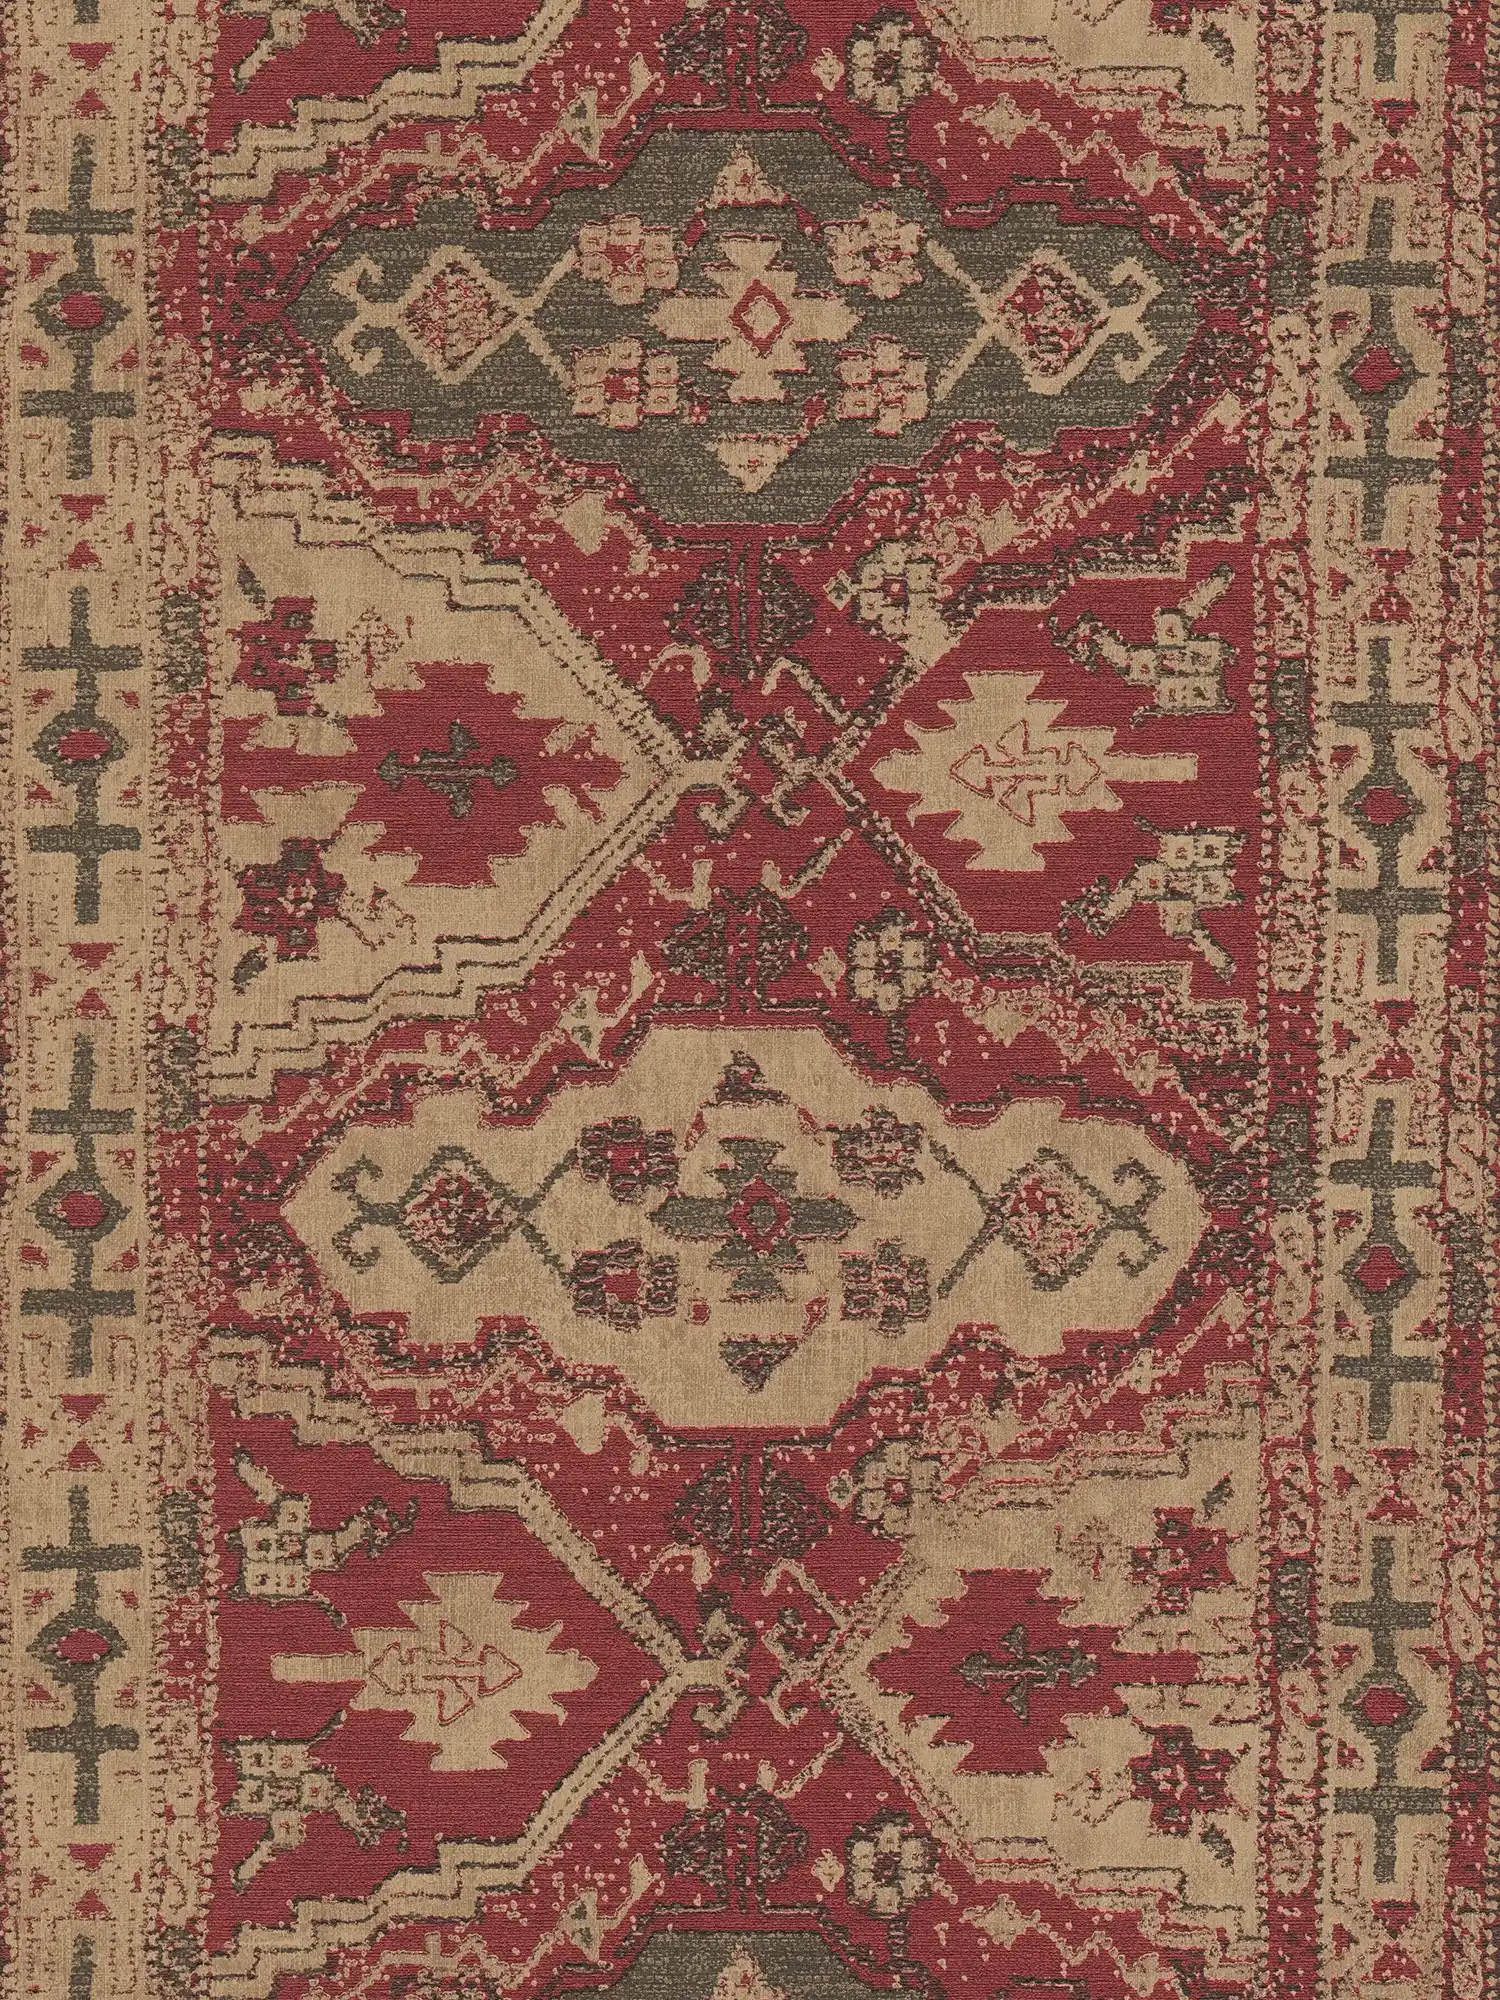 Pattern wallpaper with oriental design - beige, red, black
